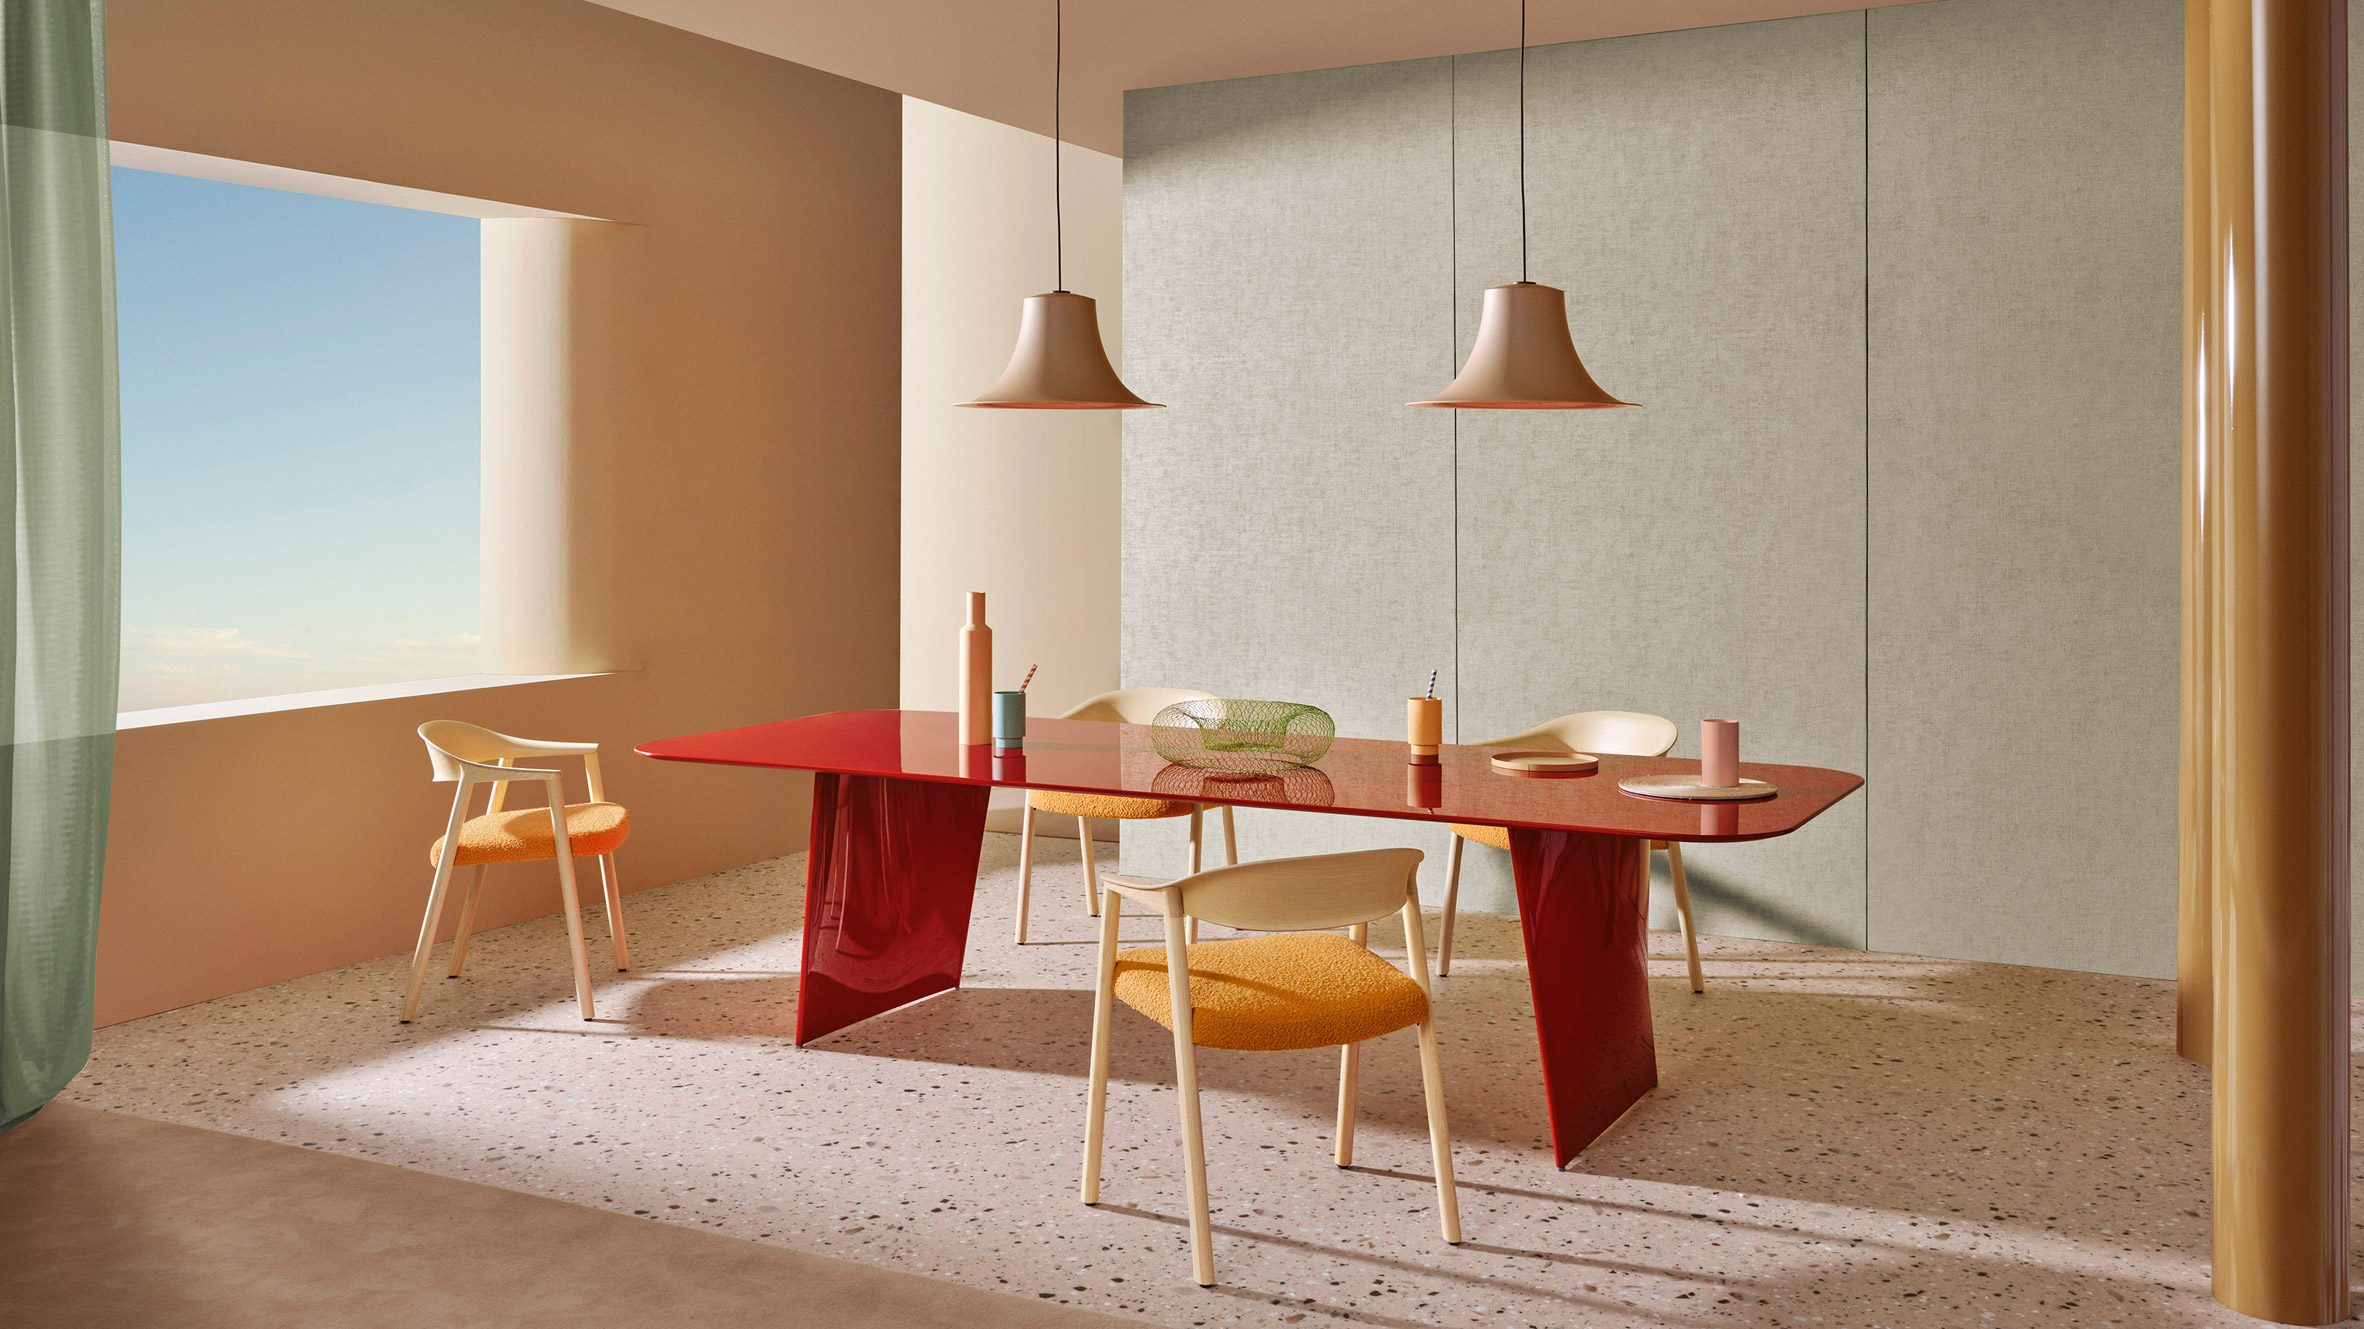 Pedrali launches fresh furniture designs to celebrate  year